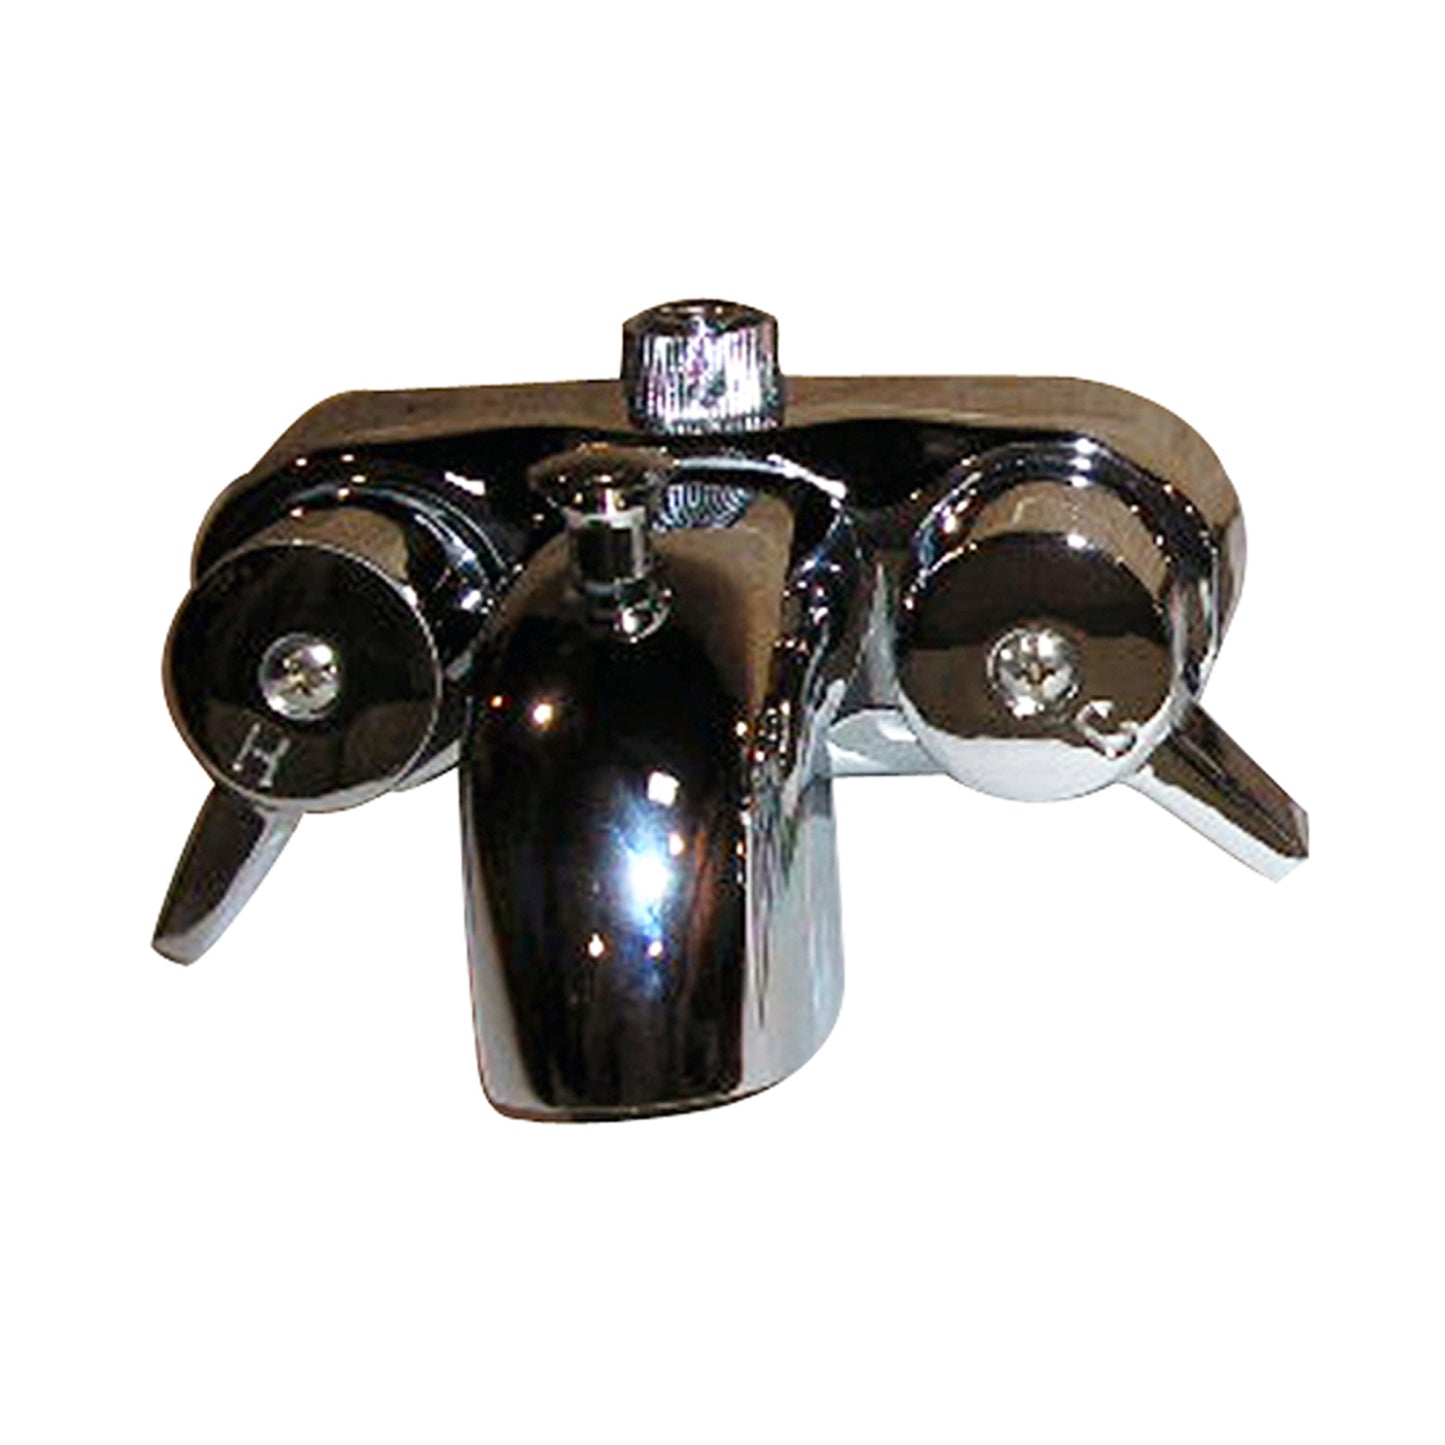 Basic Tub Faucet Kit with Riser, 54" D-Rod, Shower Head, Polished Chrome